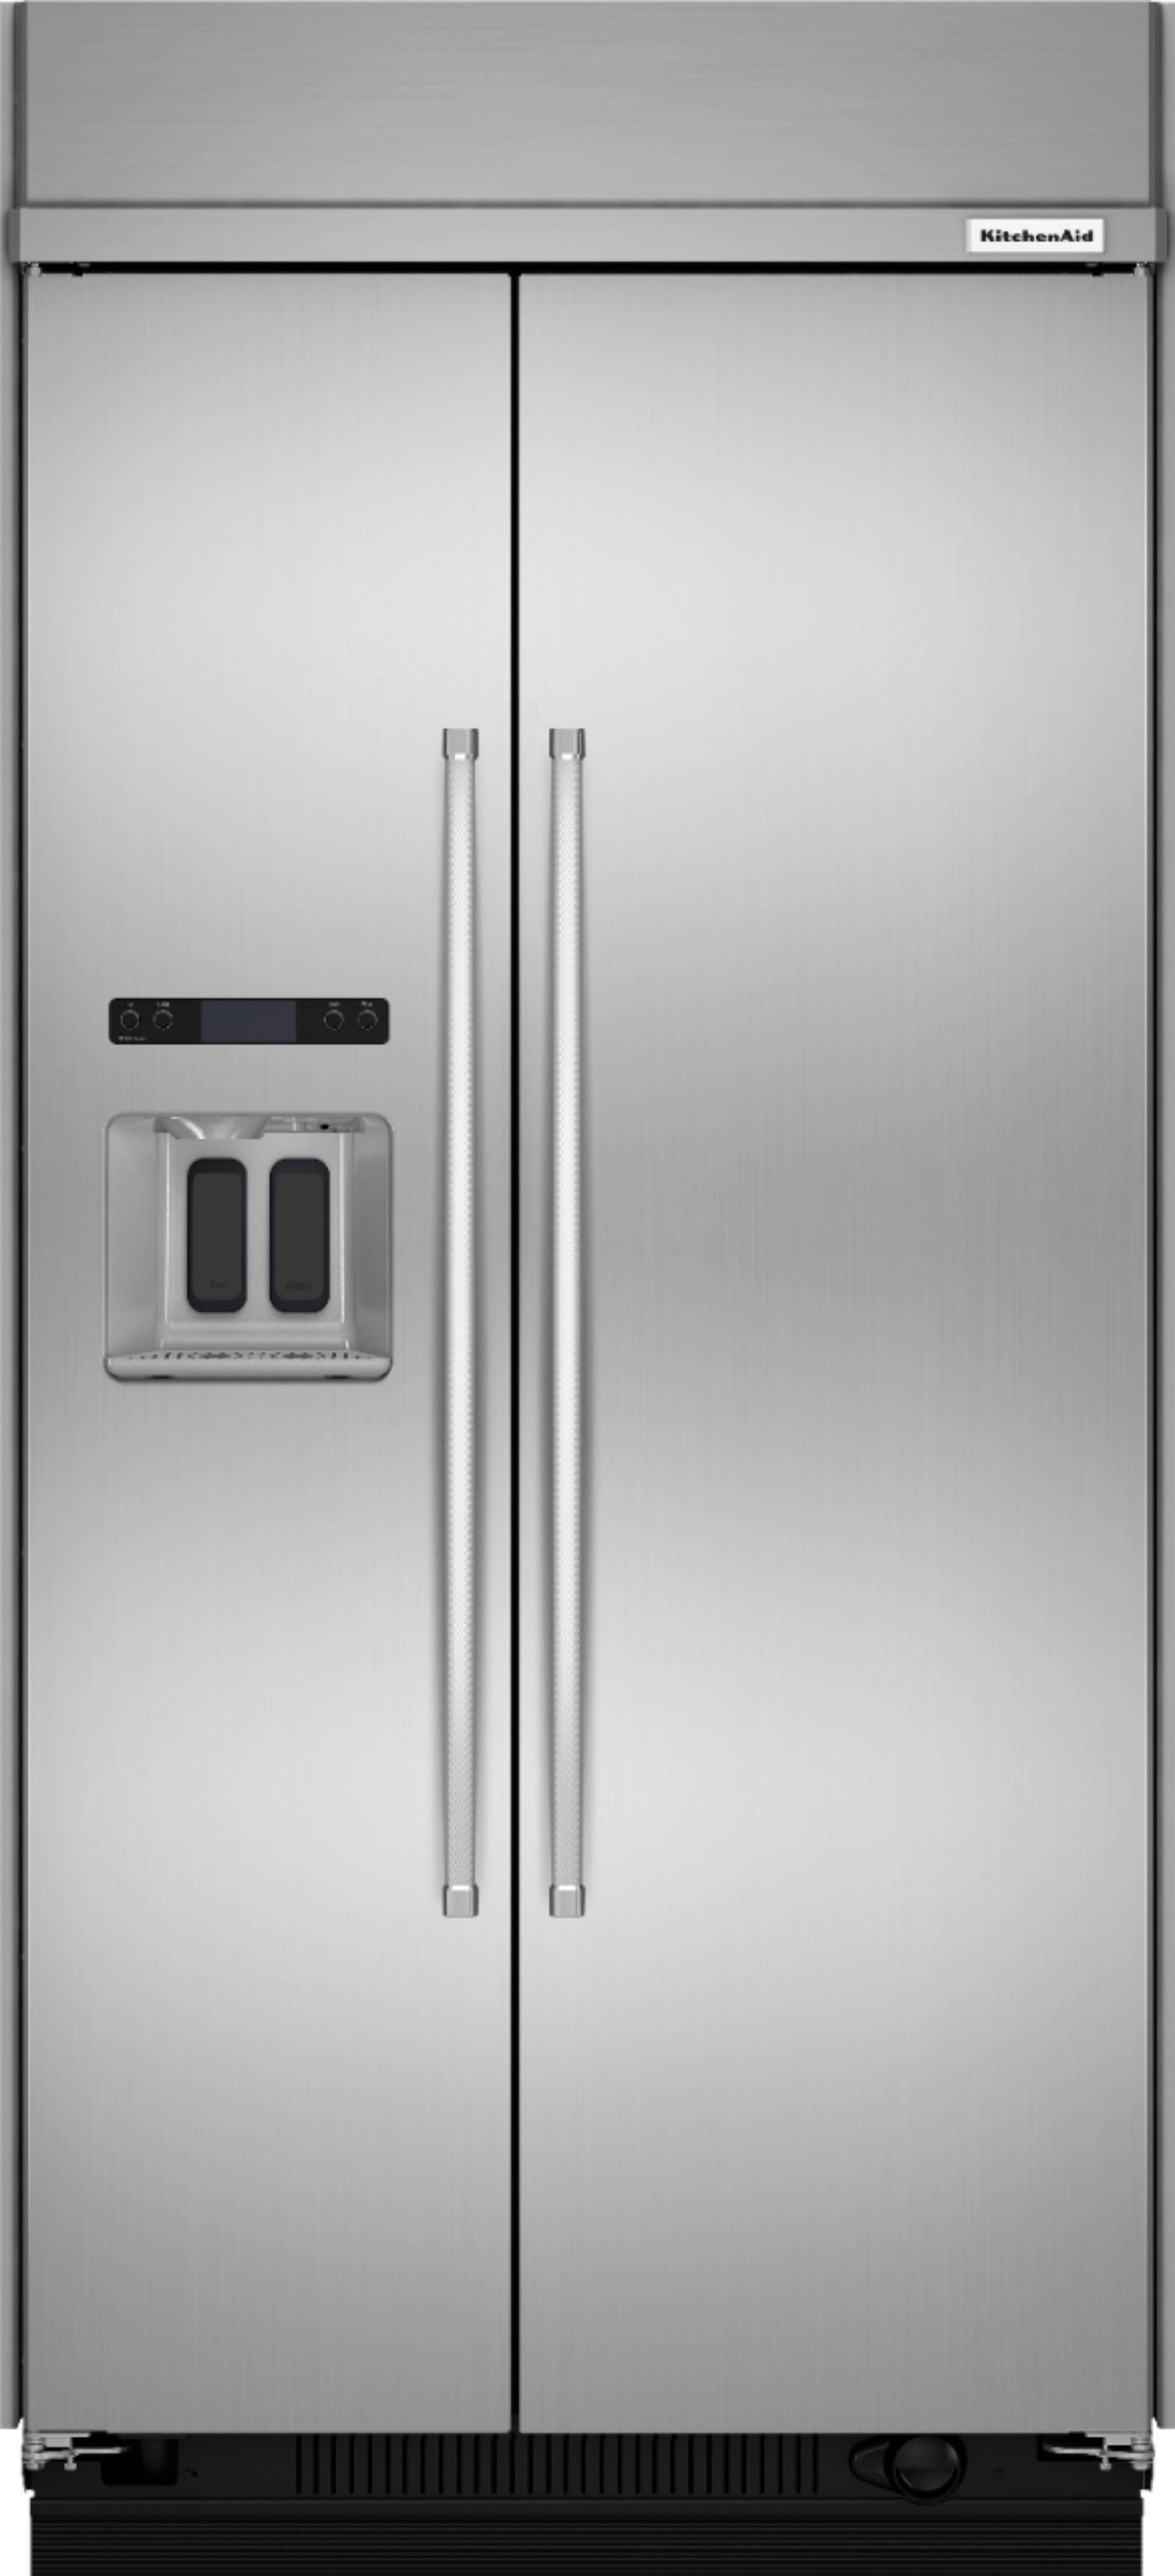 14+ 42 inch refrigerator best buy ideas in 2021 